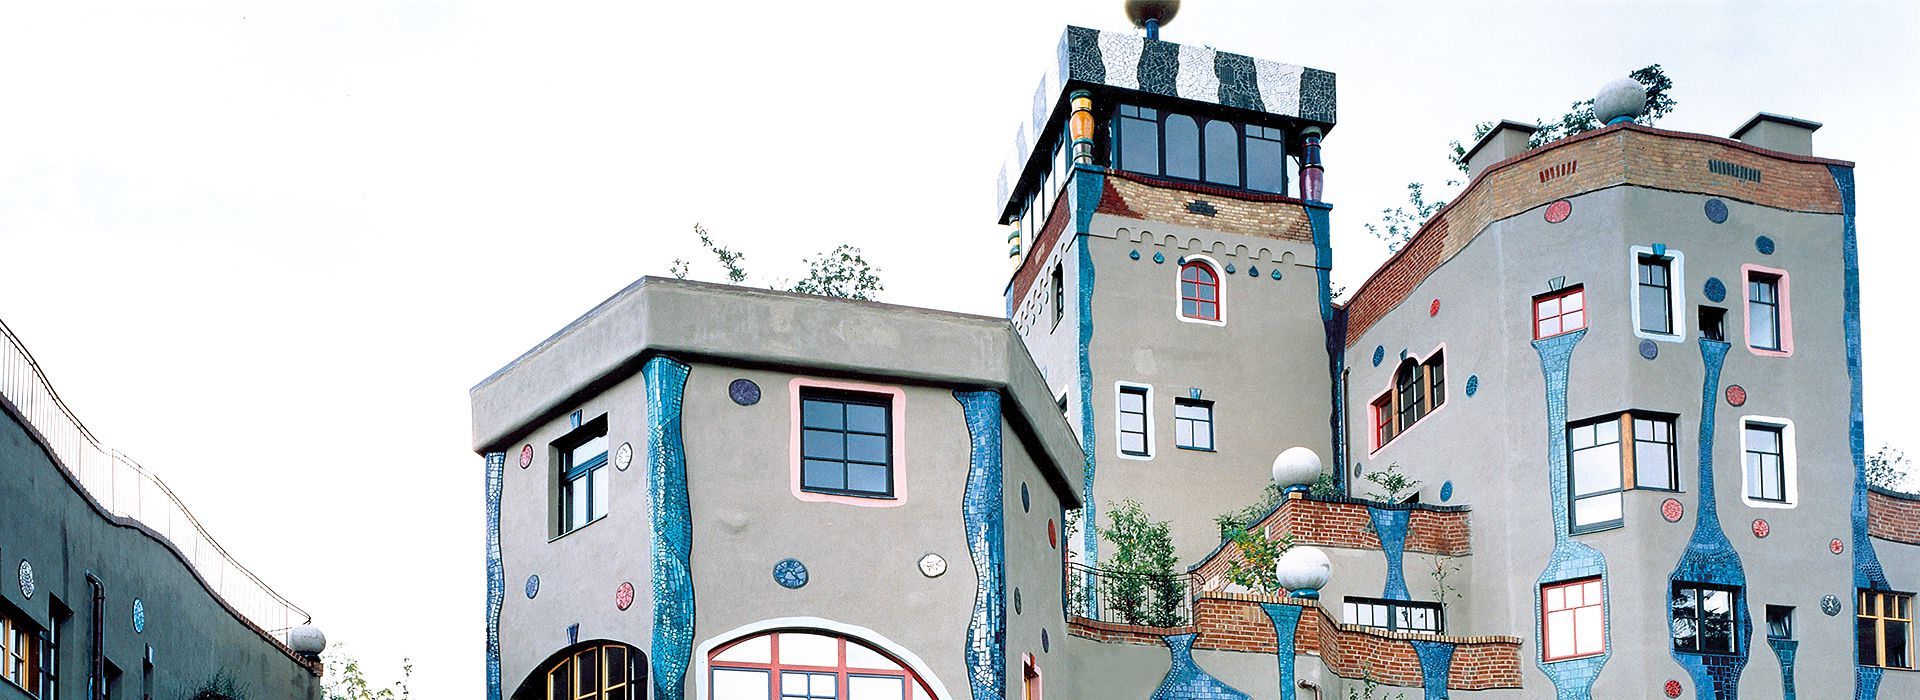 Hundertwasserhaus, Bad-Soden / Germany